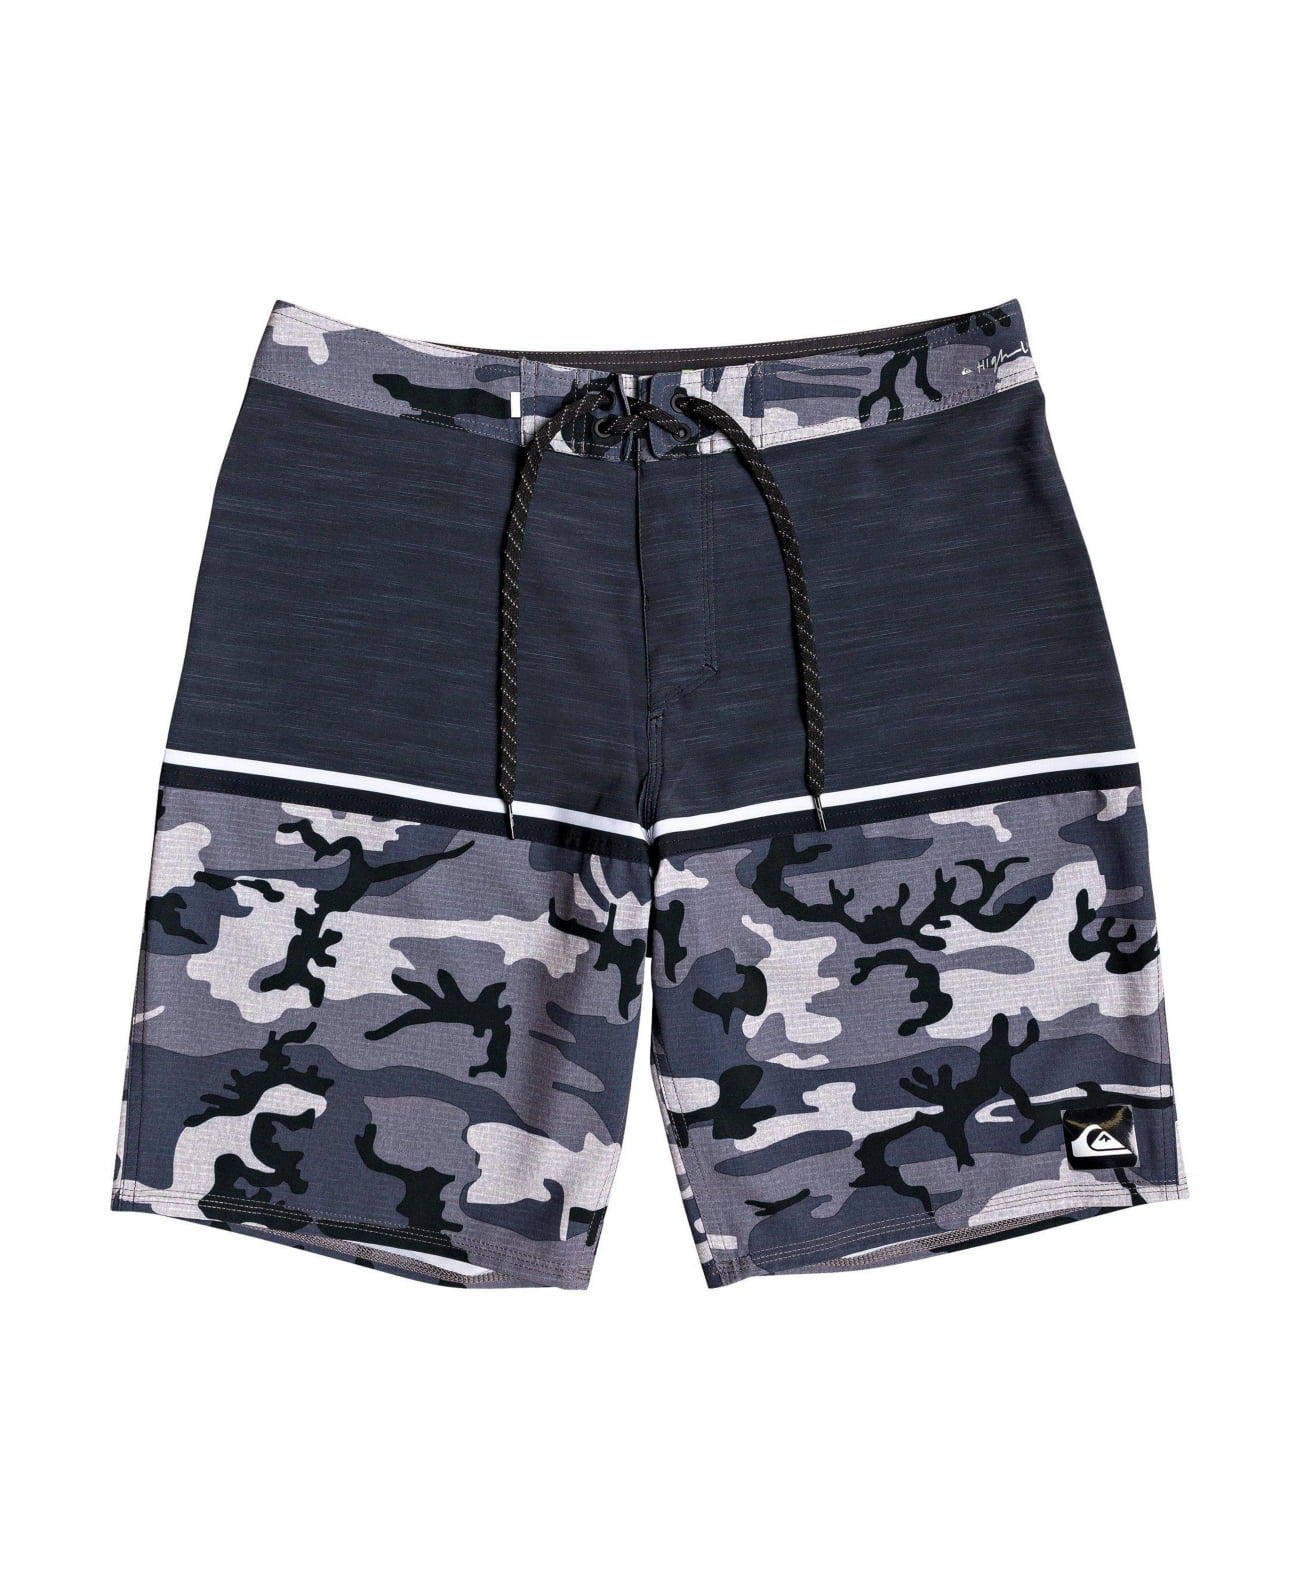 Camouflage in Black&White Mens Swim Trunks Board Shorts 